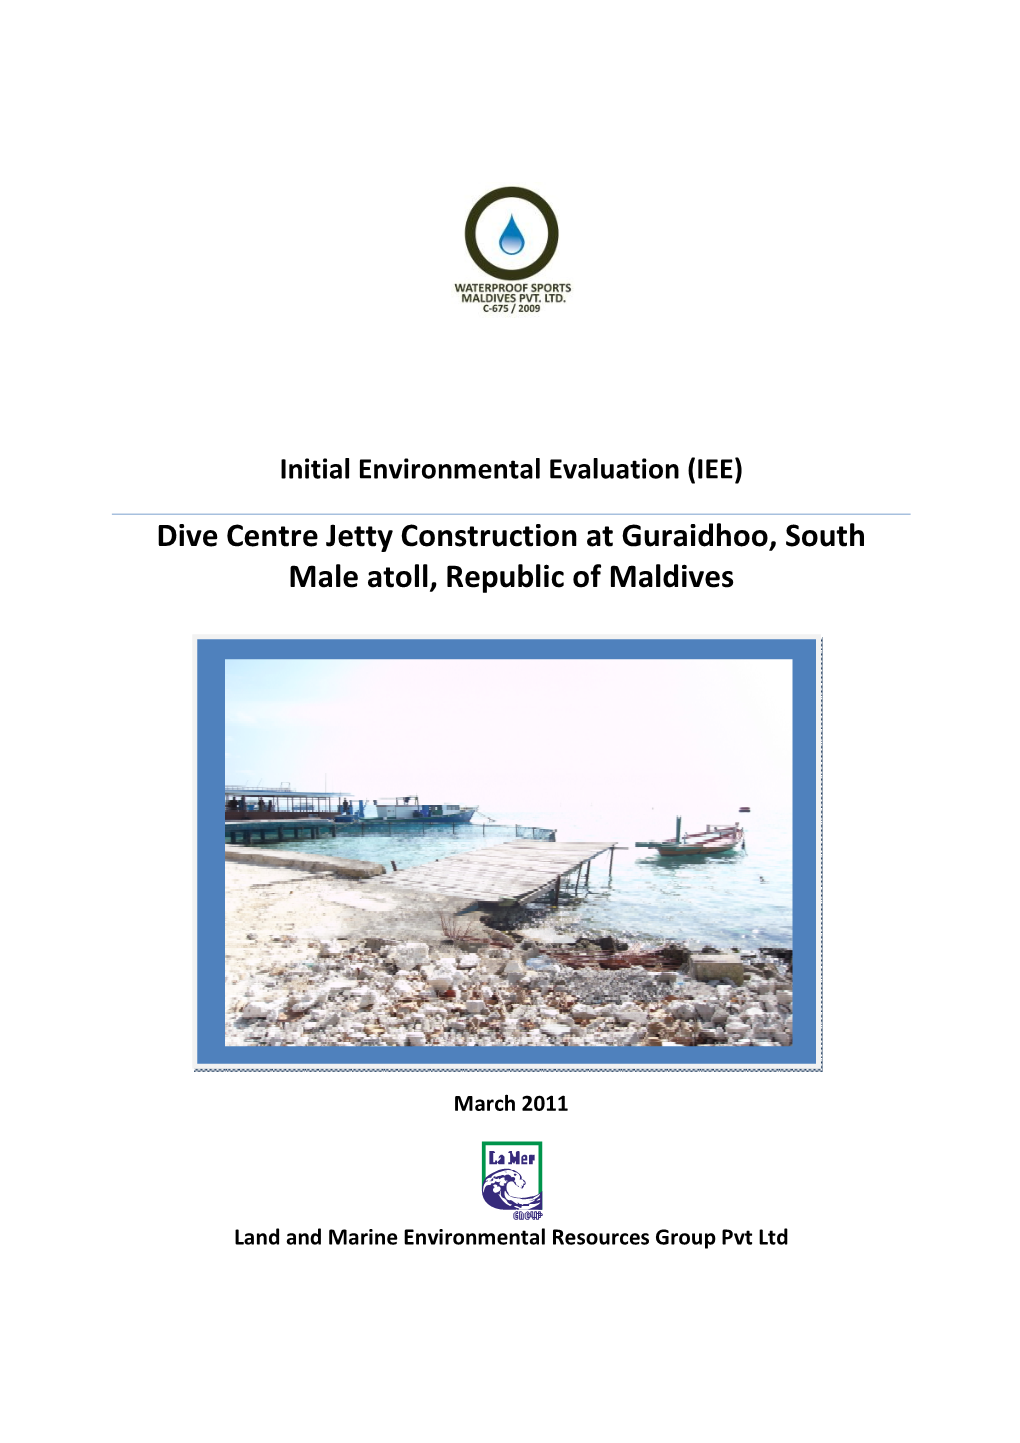 Dive Centre Jetty Construction at Guraidhoo, South Male Atoll, Republic of Maldives